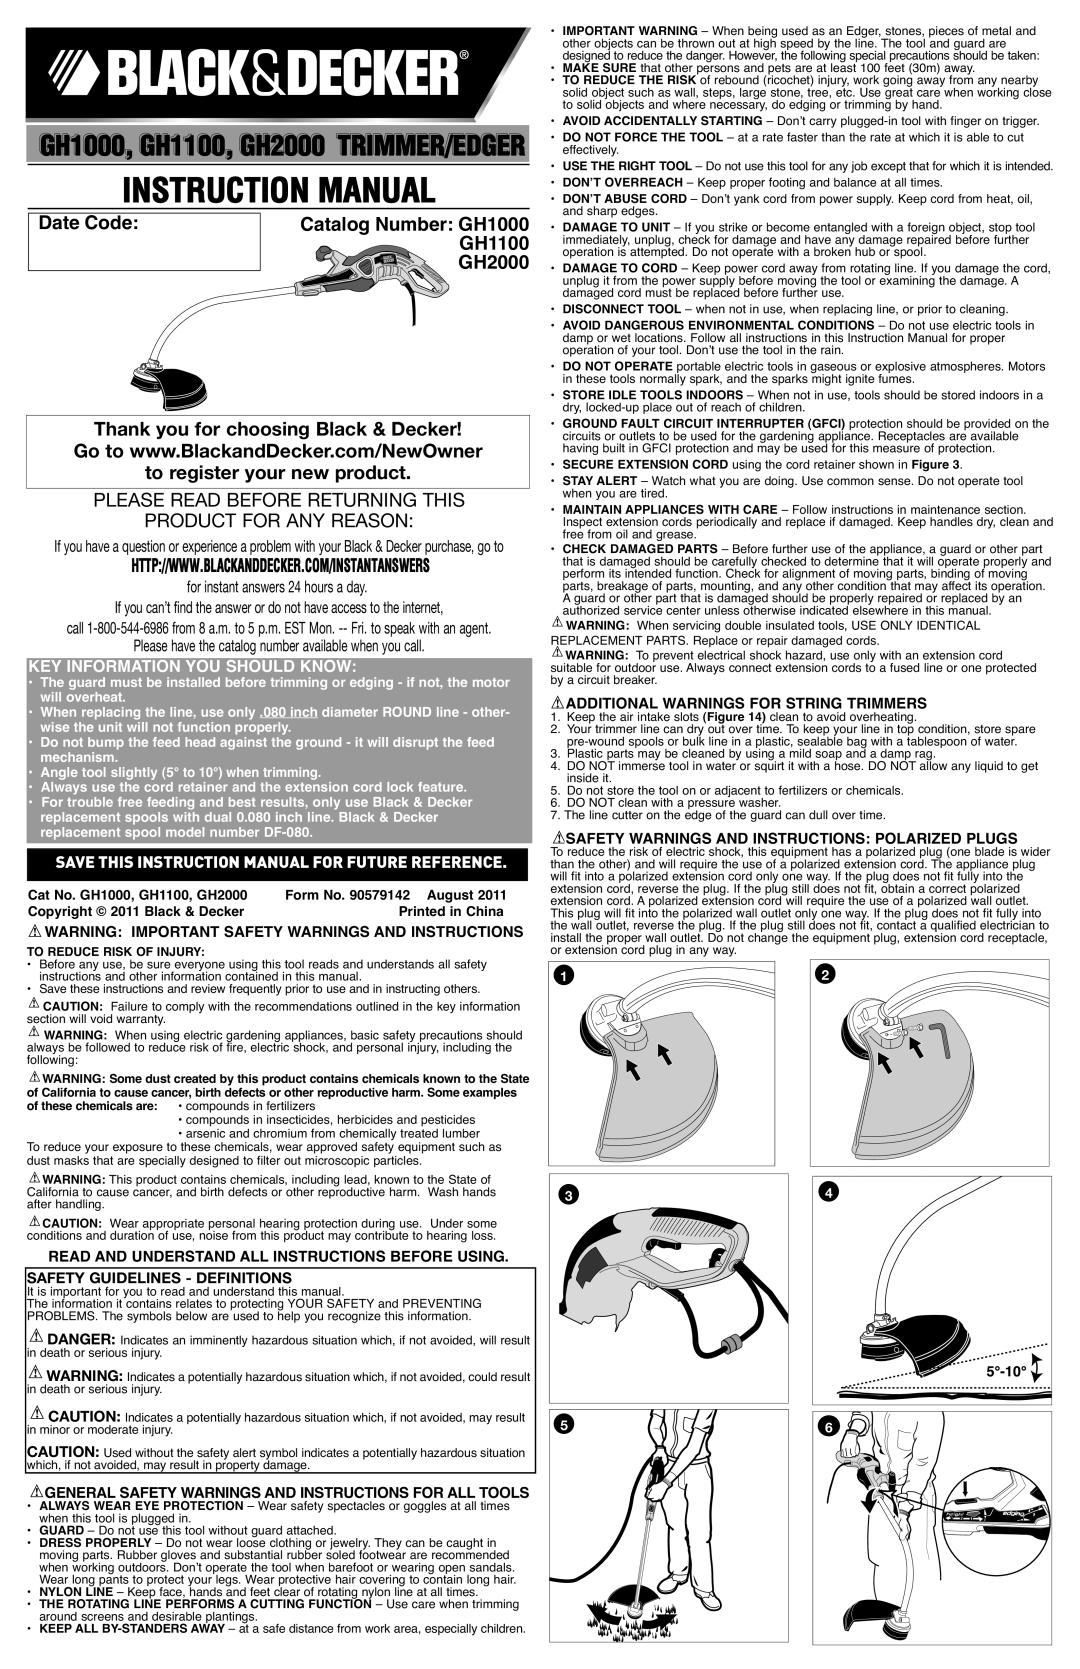 Black & Decker GH1100 instruction manual Date Code, GH2000, Thank you for choosing Black & Decker, Instruction Manual 